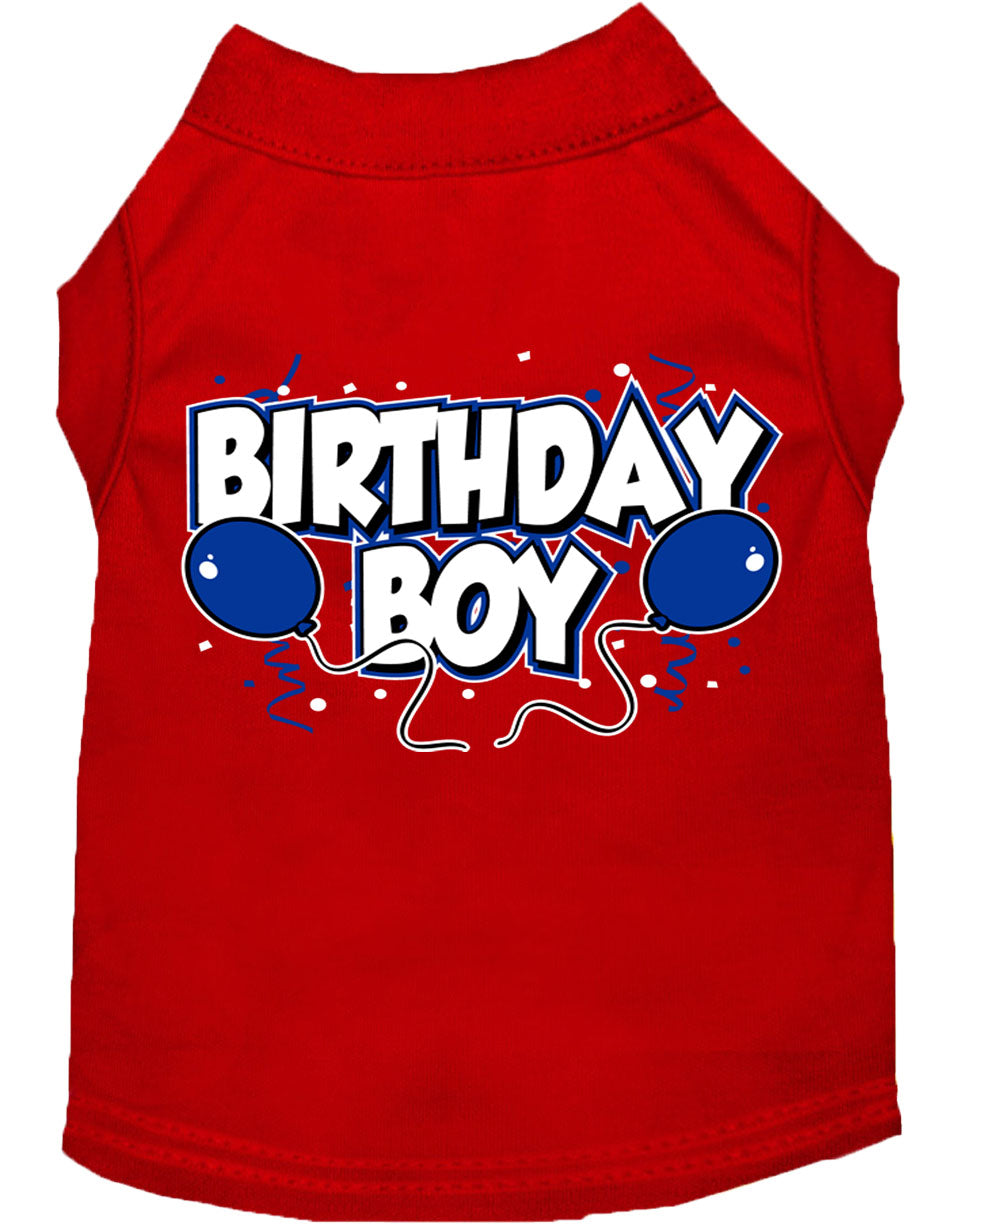 Birthday Boy Screen Print Shirts - Stay Golden Doodle